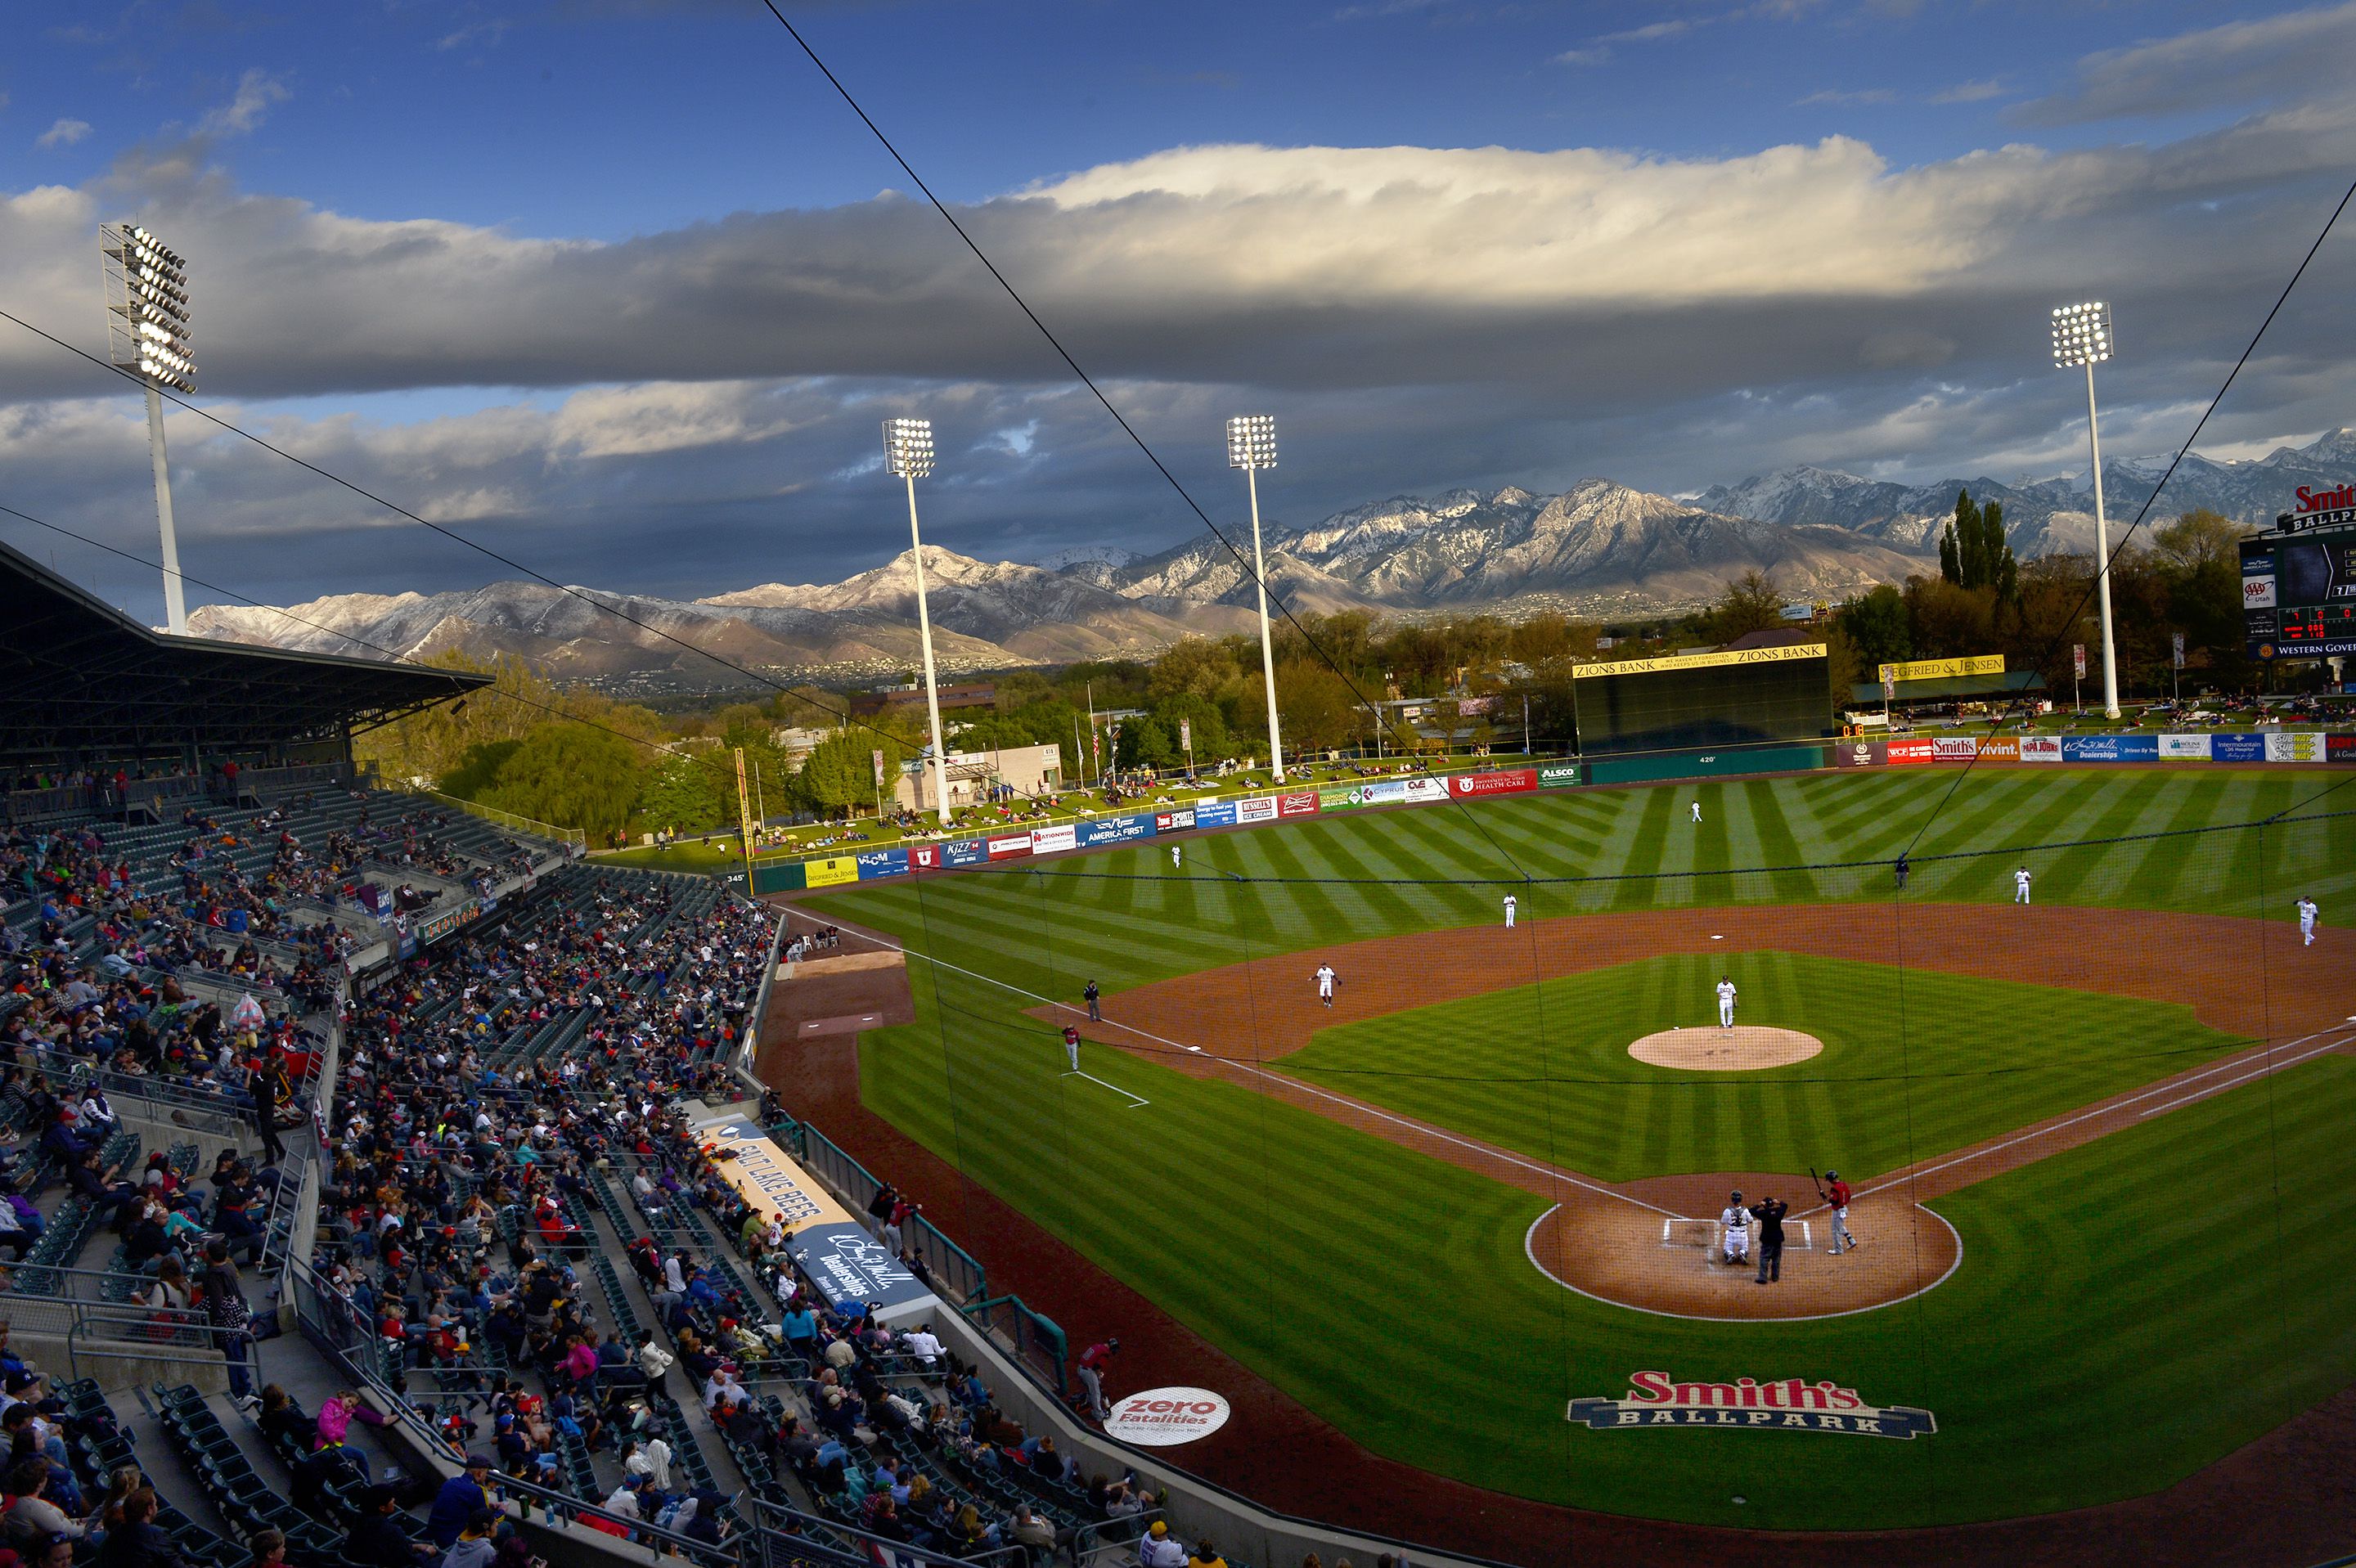 Salt Lake Bees Home Stadium Gets a New Name